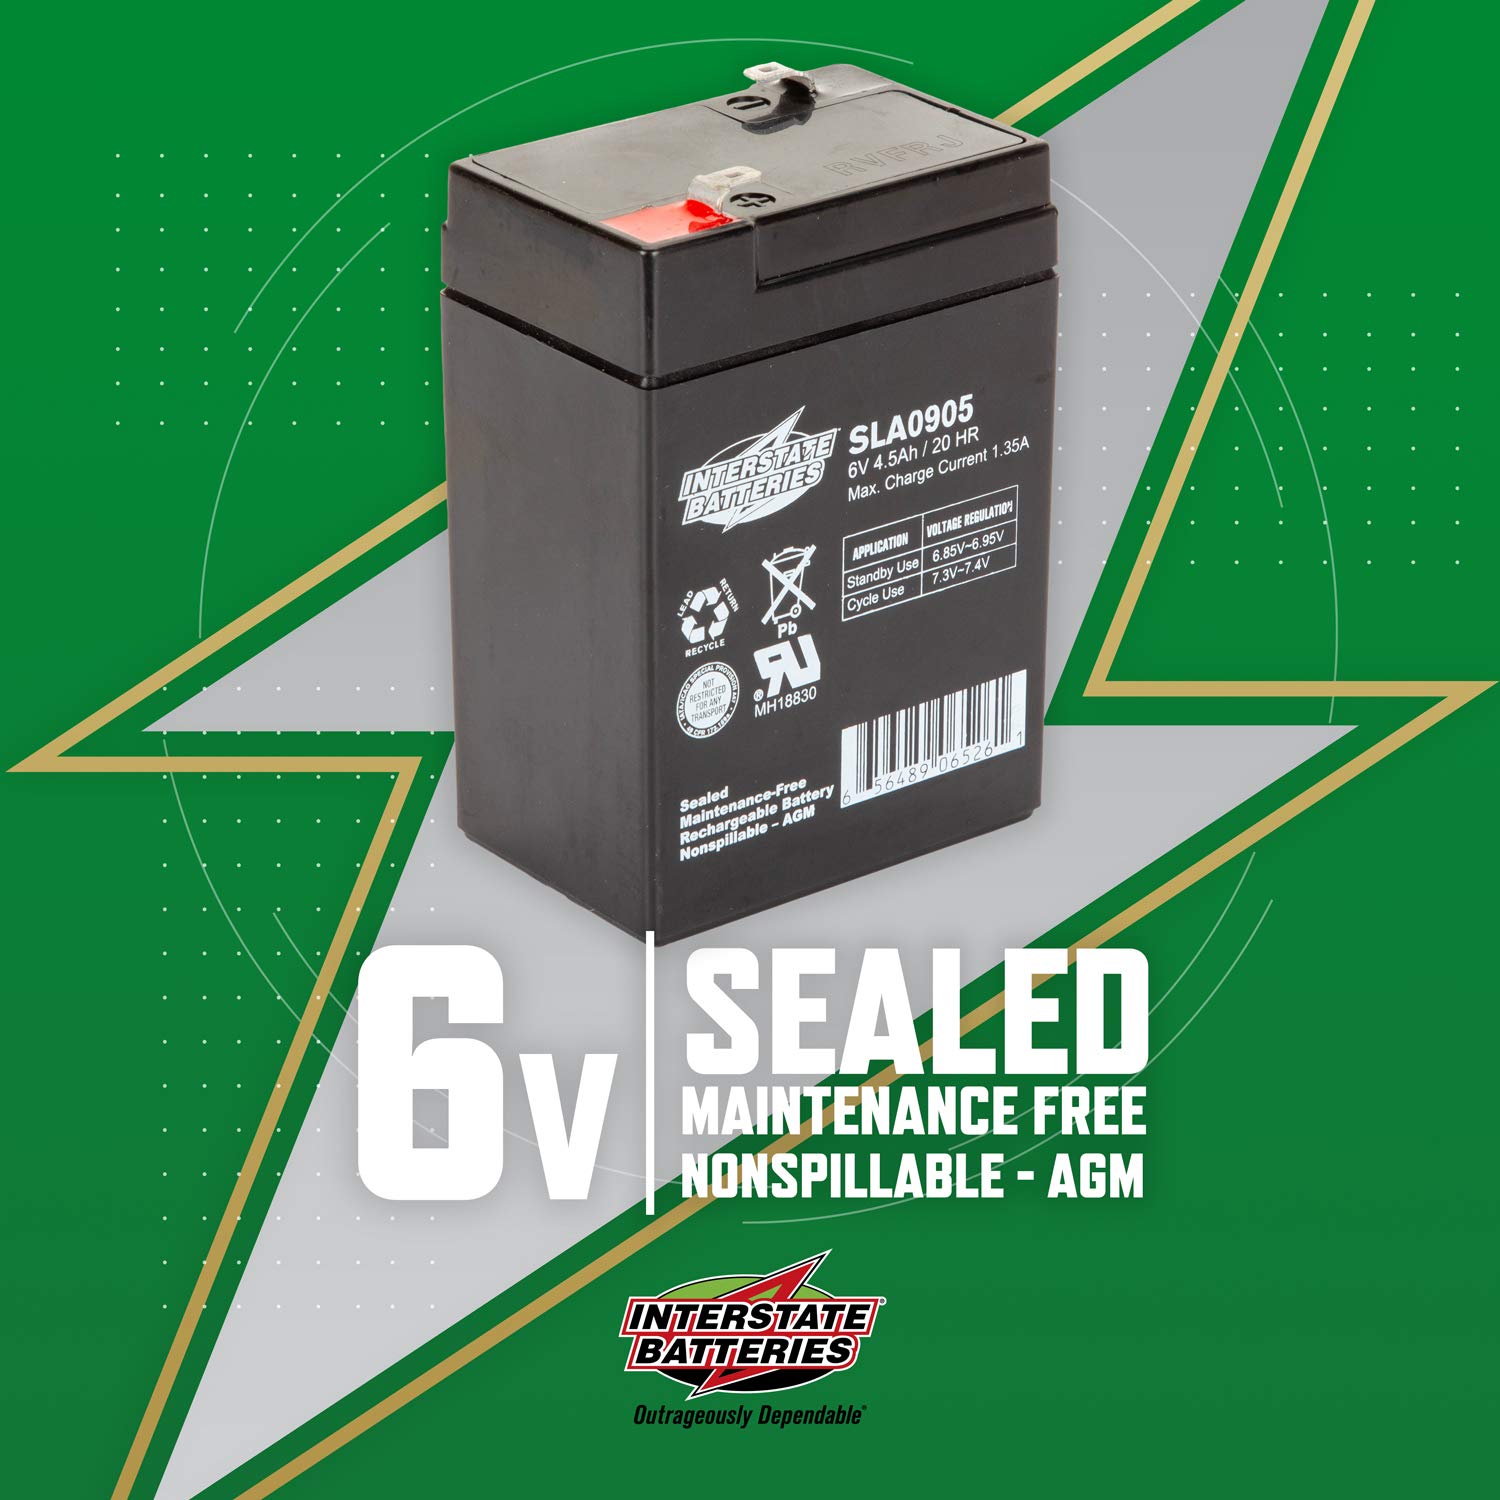 Interstate Batteries 6V 4.5Ah Rechargeable Battery (SLA0905) Sealed Lead Acid Rechargeable SLA AGM (F1 Terminal) Blood Pressure Monitor, Oxygen & Pulse Meter, Deer Feeder (Pack of 2)